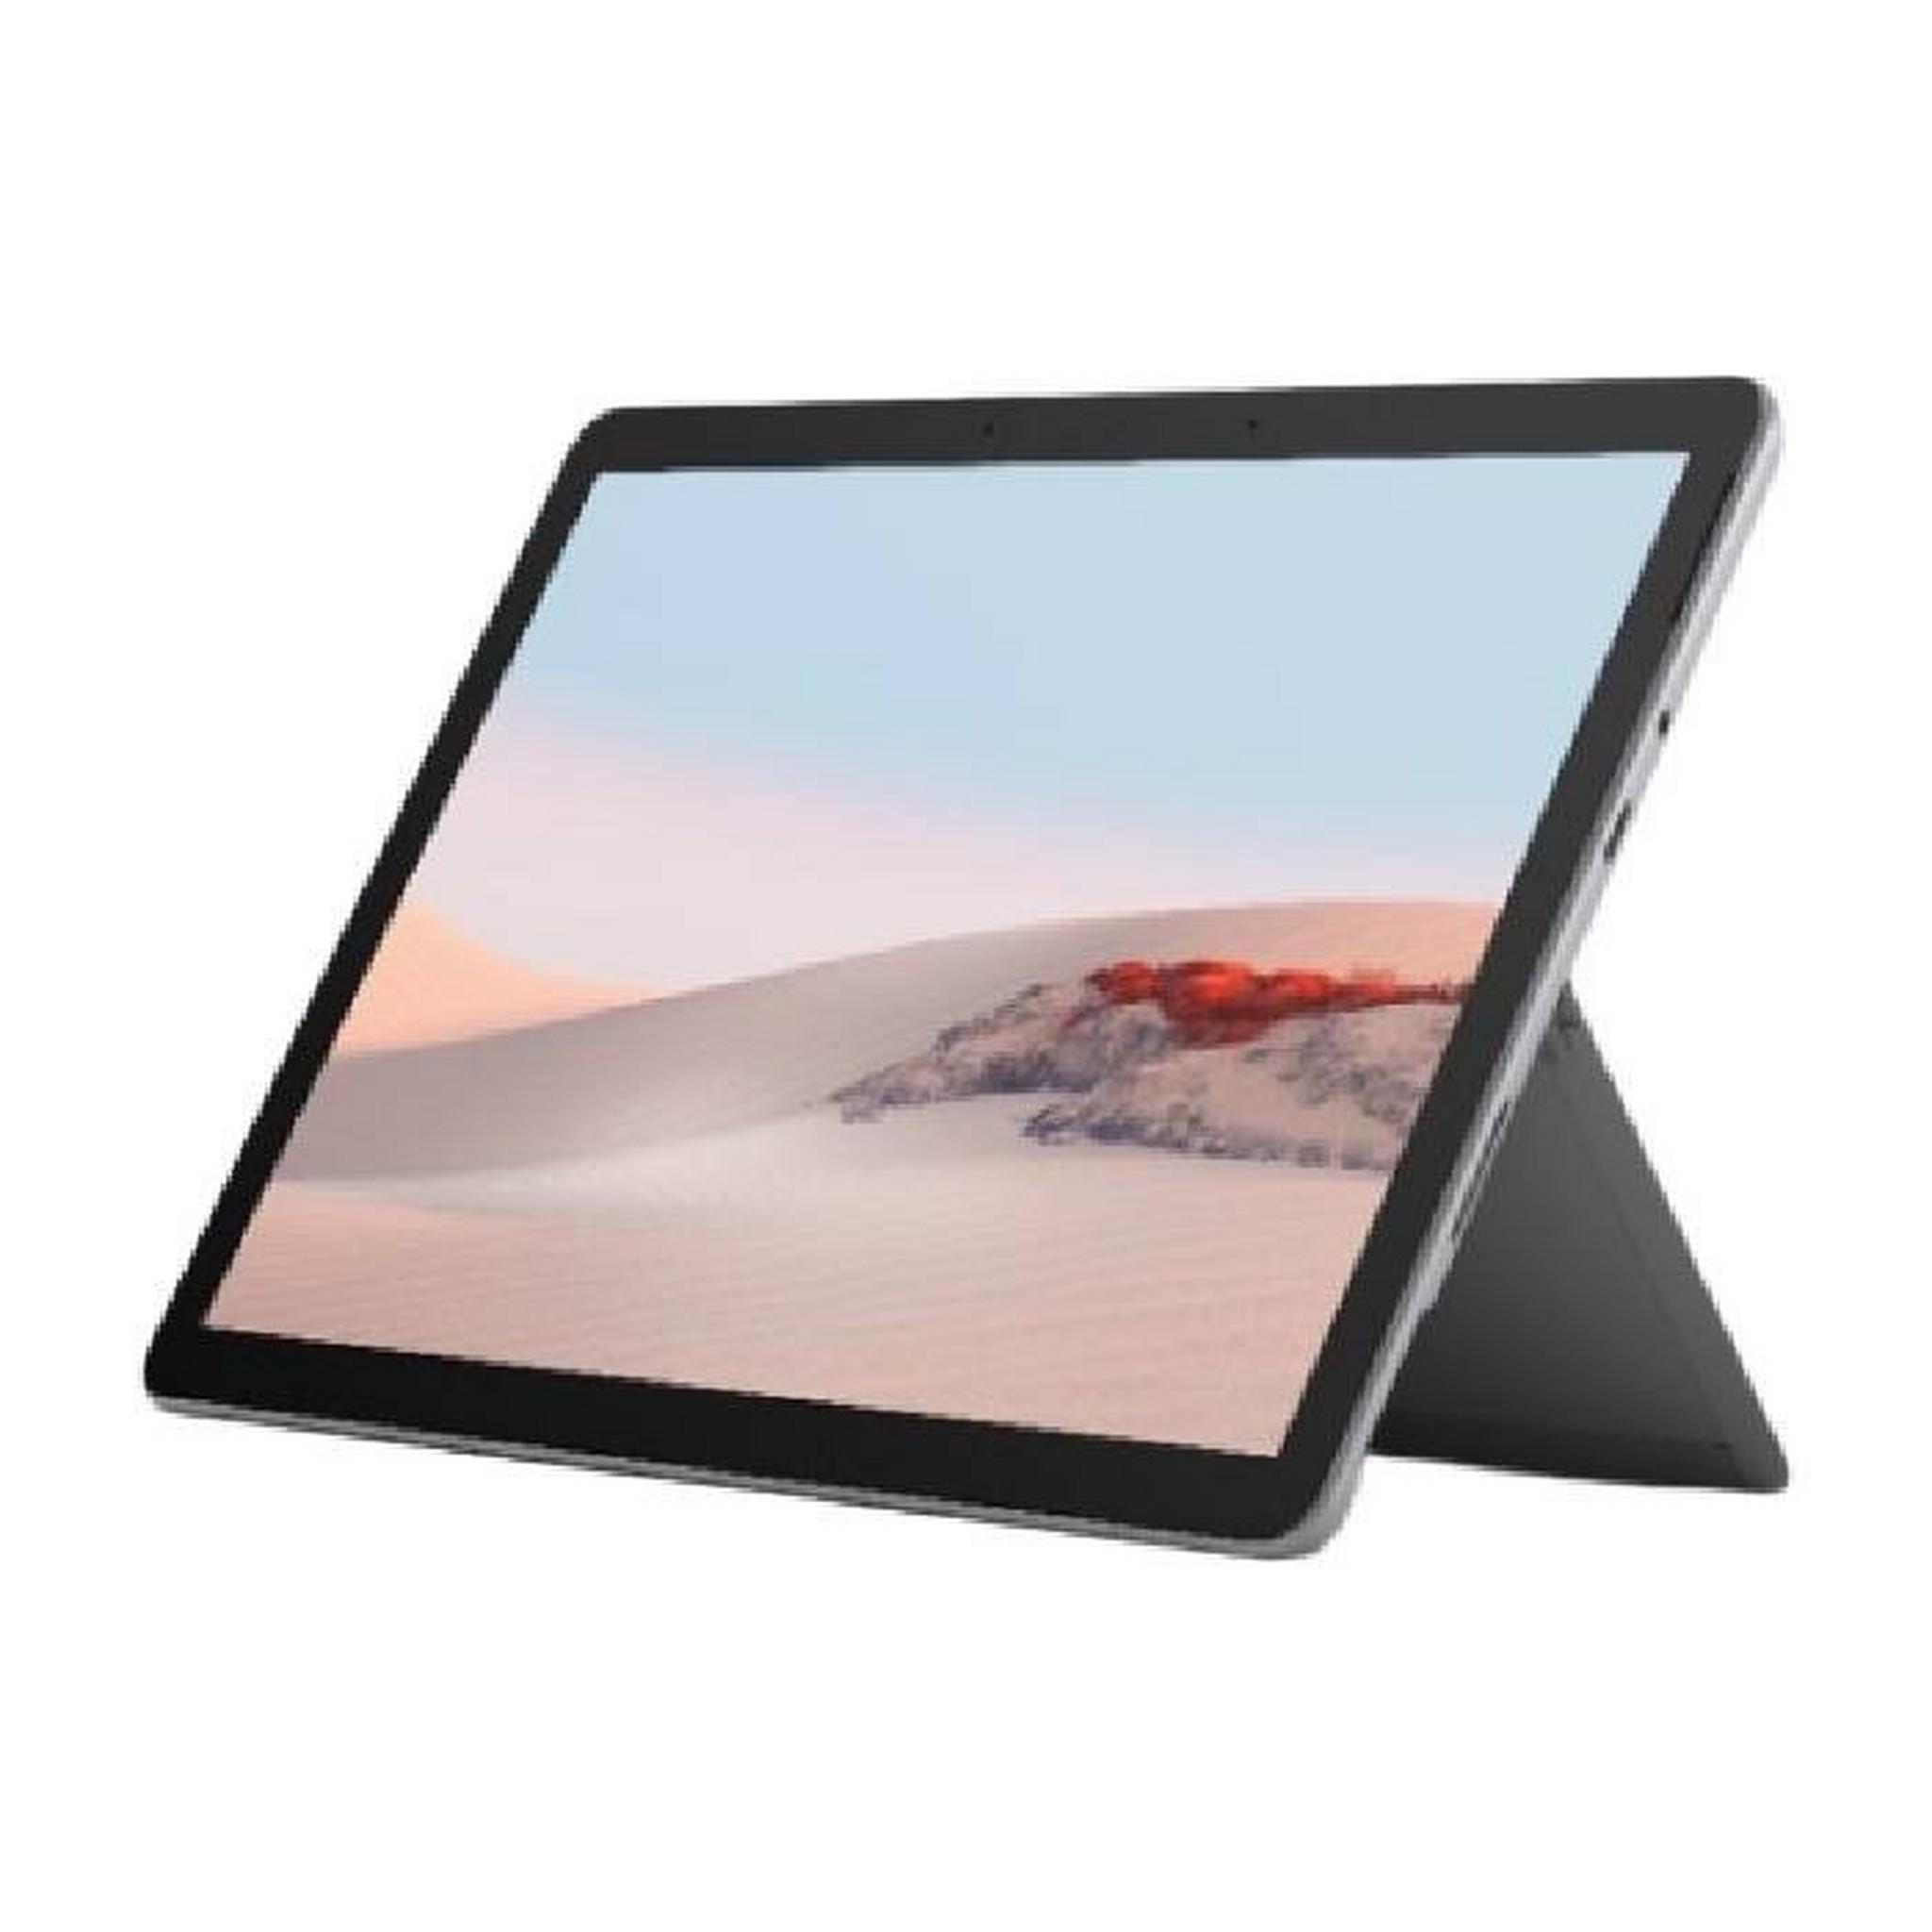 Microsoft Surface Go 2 Intel Pentium Gold 4425Y 8GB RAM 128GB SSD – 10.51 Inch – Platinum